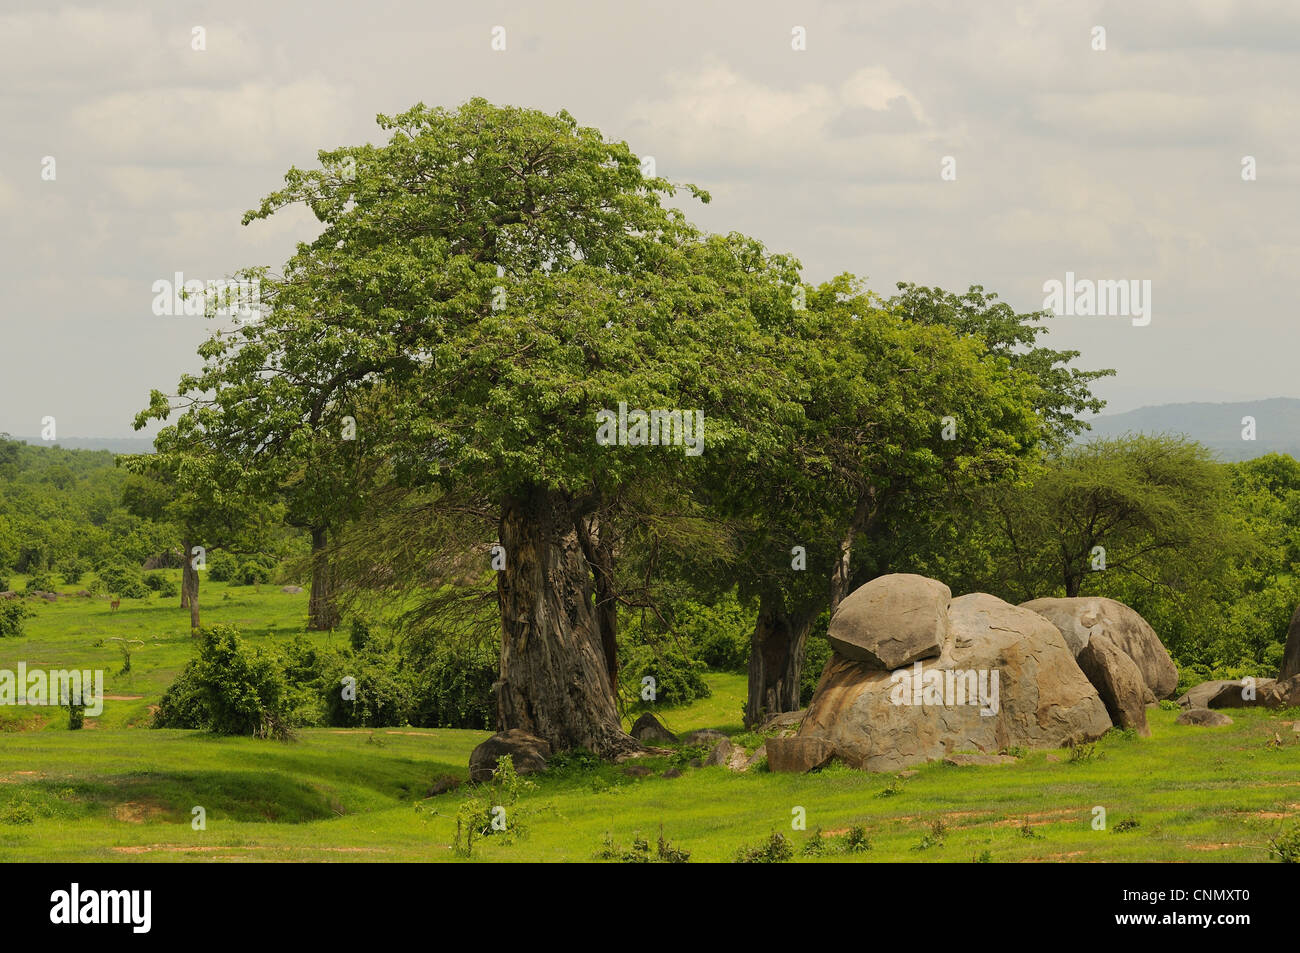 View of trees and rocky outcrop in bush habitat, Ruaha N.P., Tanzania Stock Photo